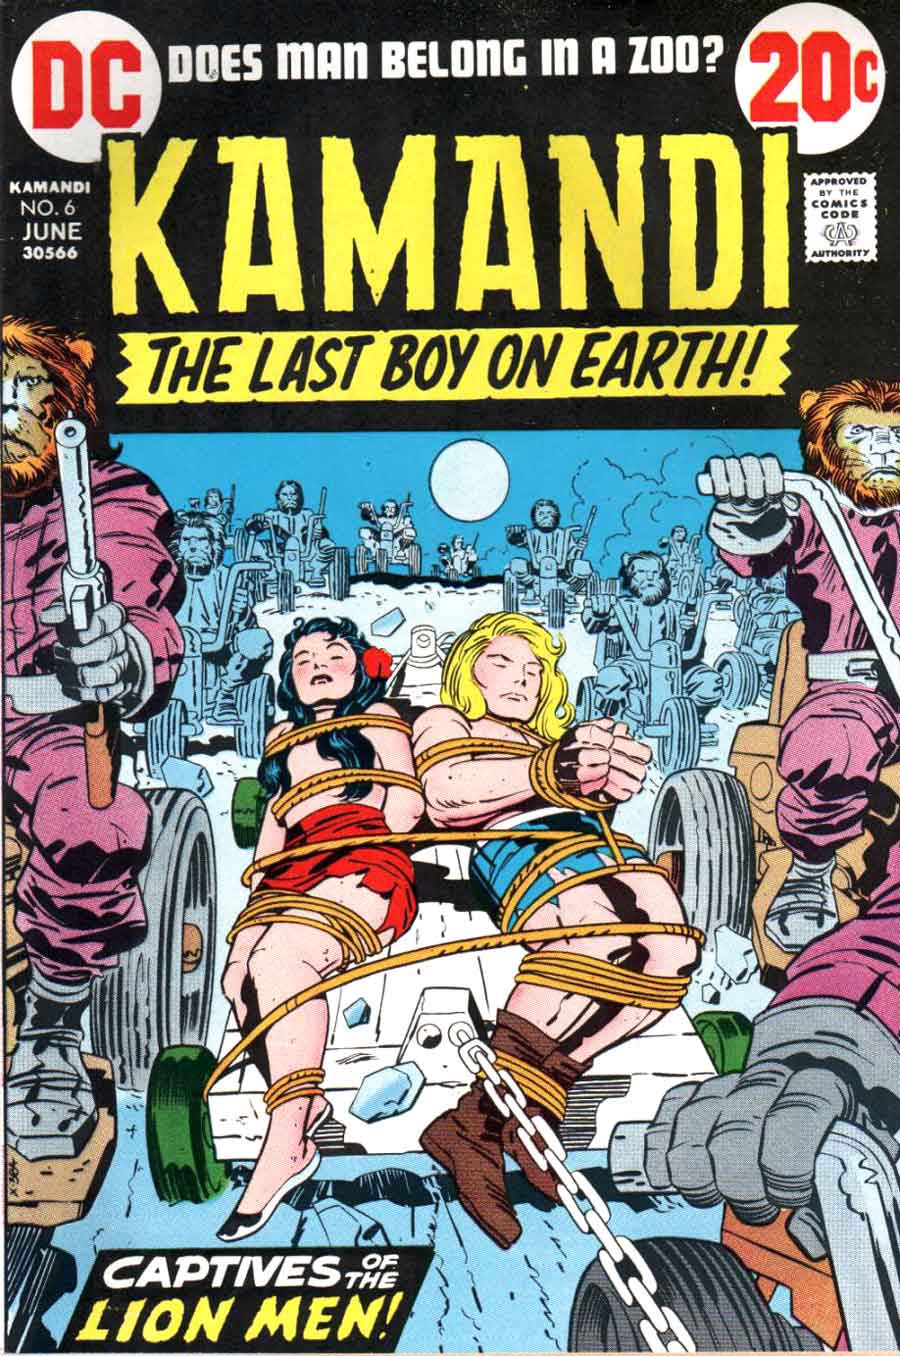 Kamandi v1 #6 dc 1970s bronze age comic book cover art by Jack Kirby